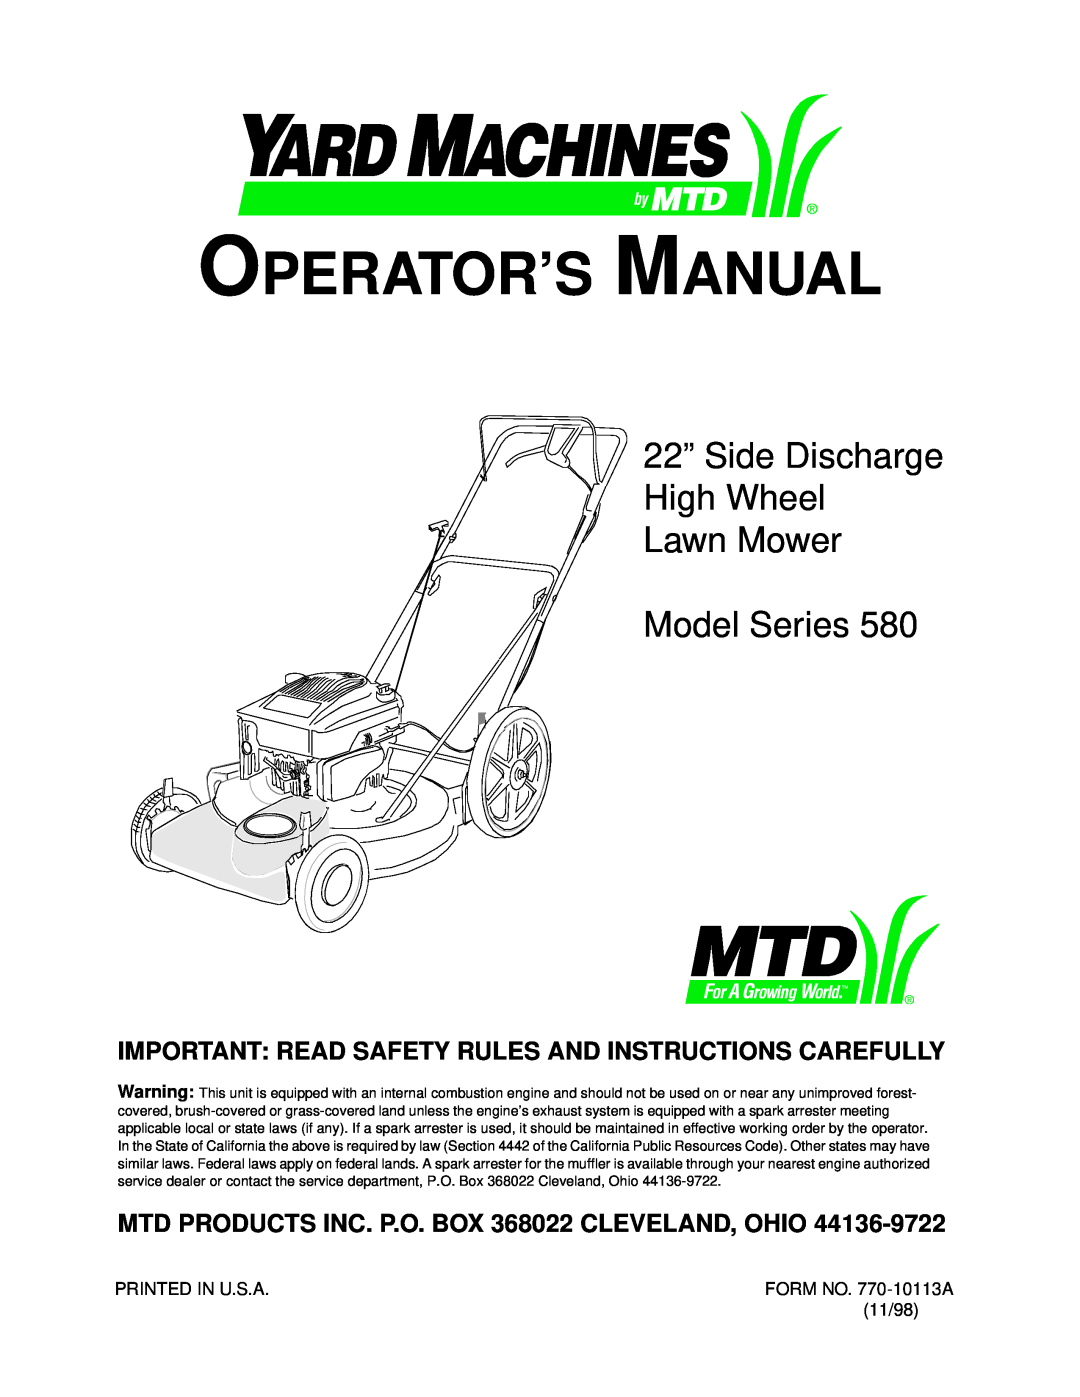 Yard Machines 580 Series manual MTD PRODUCTS INC. P.O. BOX 368022 CLEVELAND, OHIO, Operator’S Manual, Model Series 